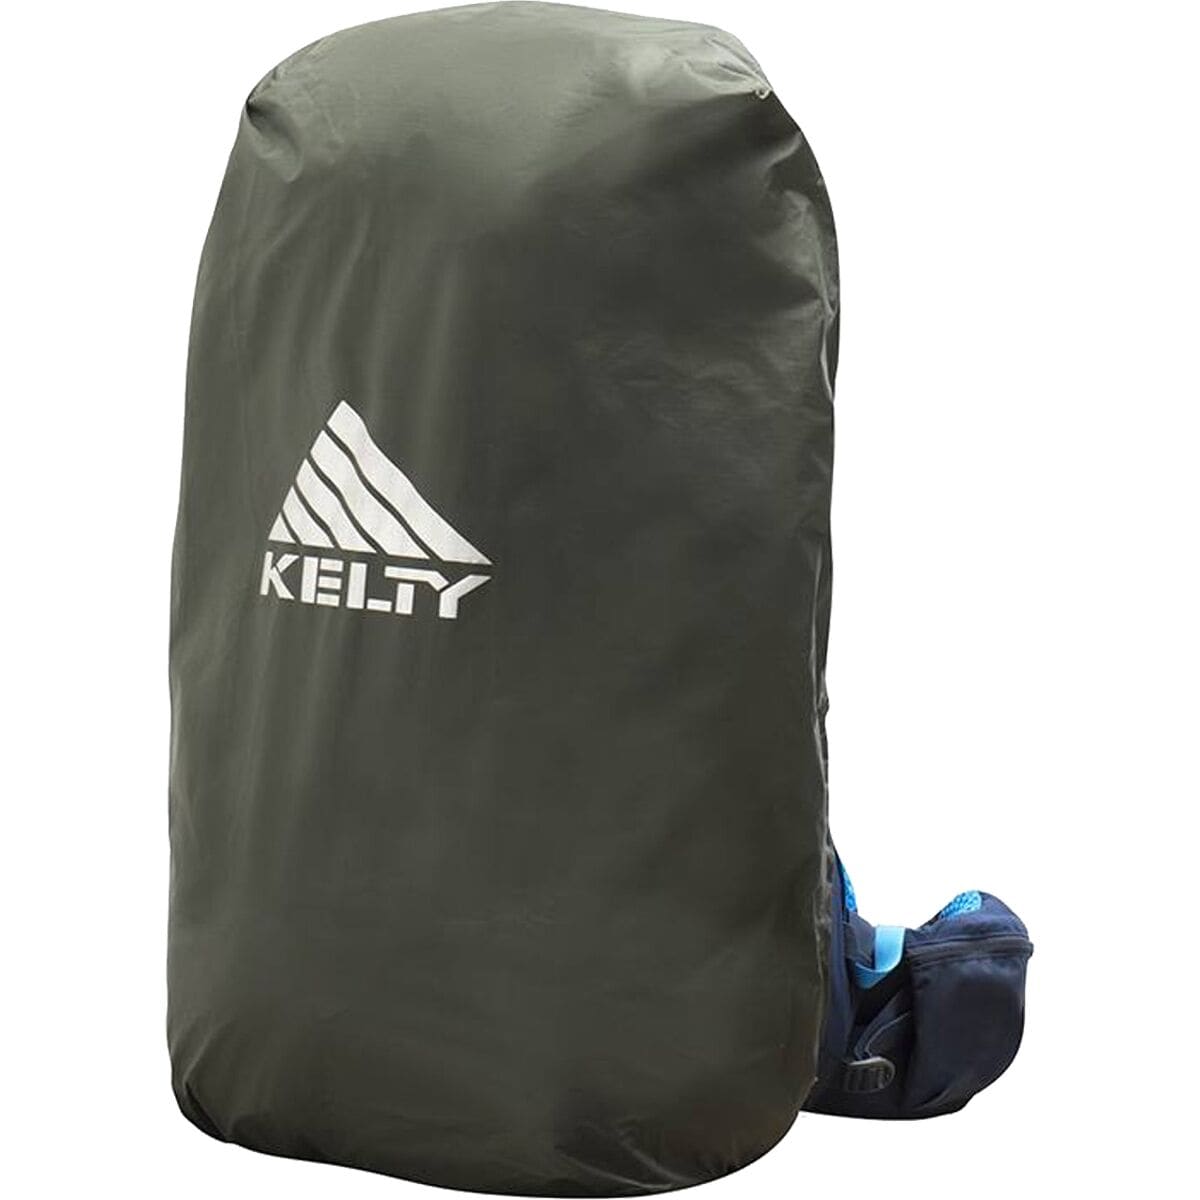 Kelty Rain Cover Regular